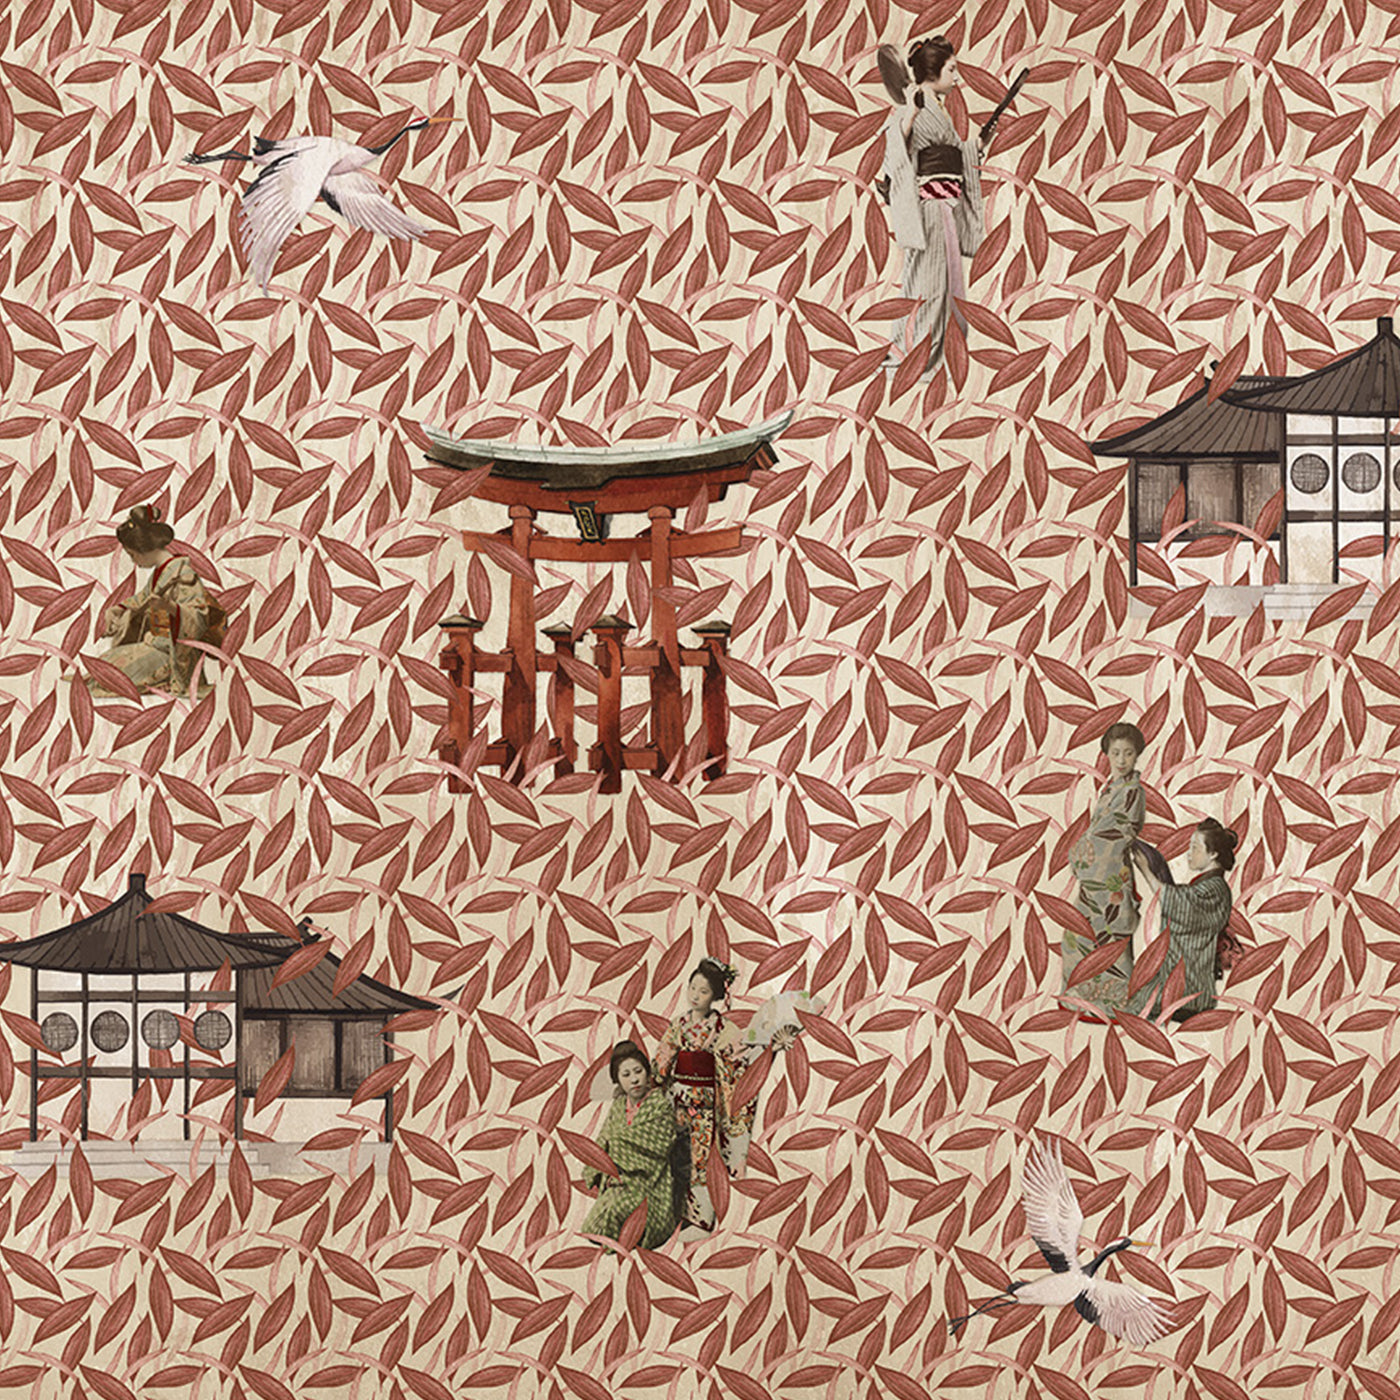 Geishe Wallpaper by Matteo Stucchi #2 - Alternative view 1